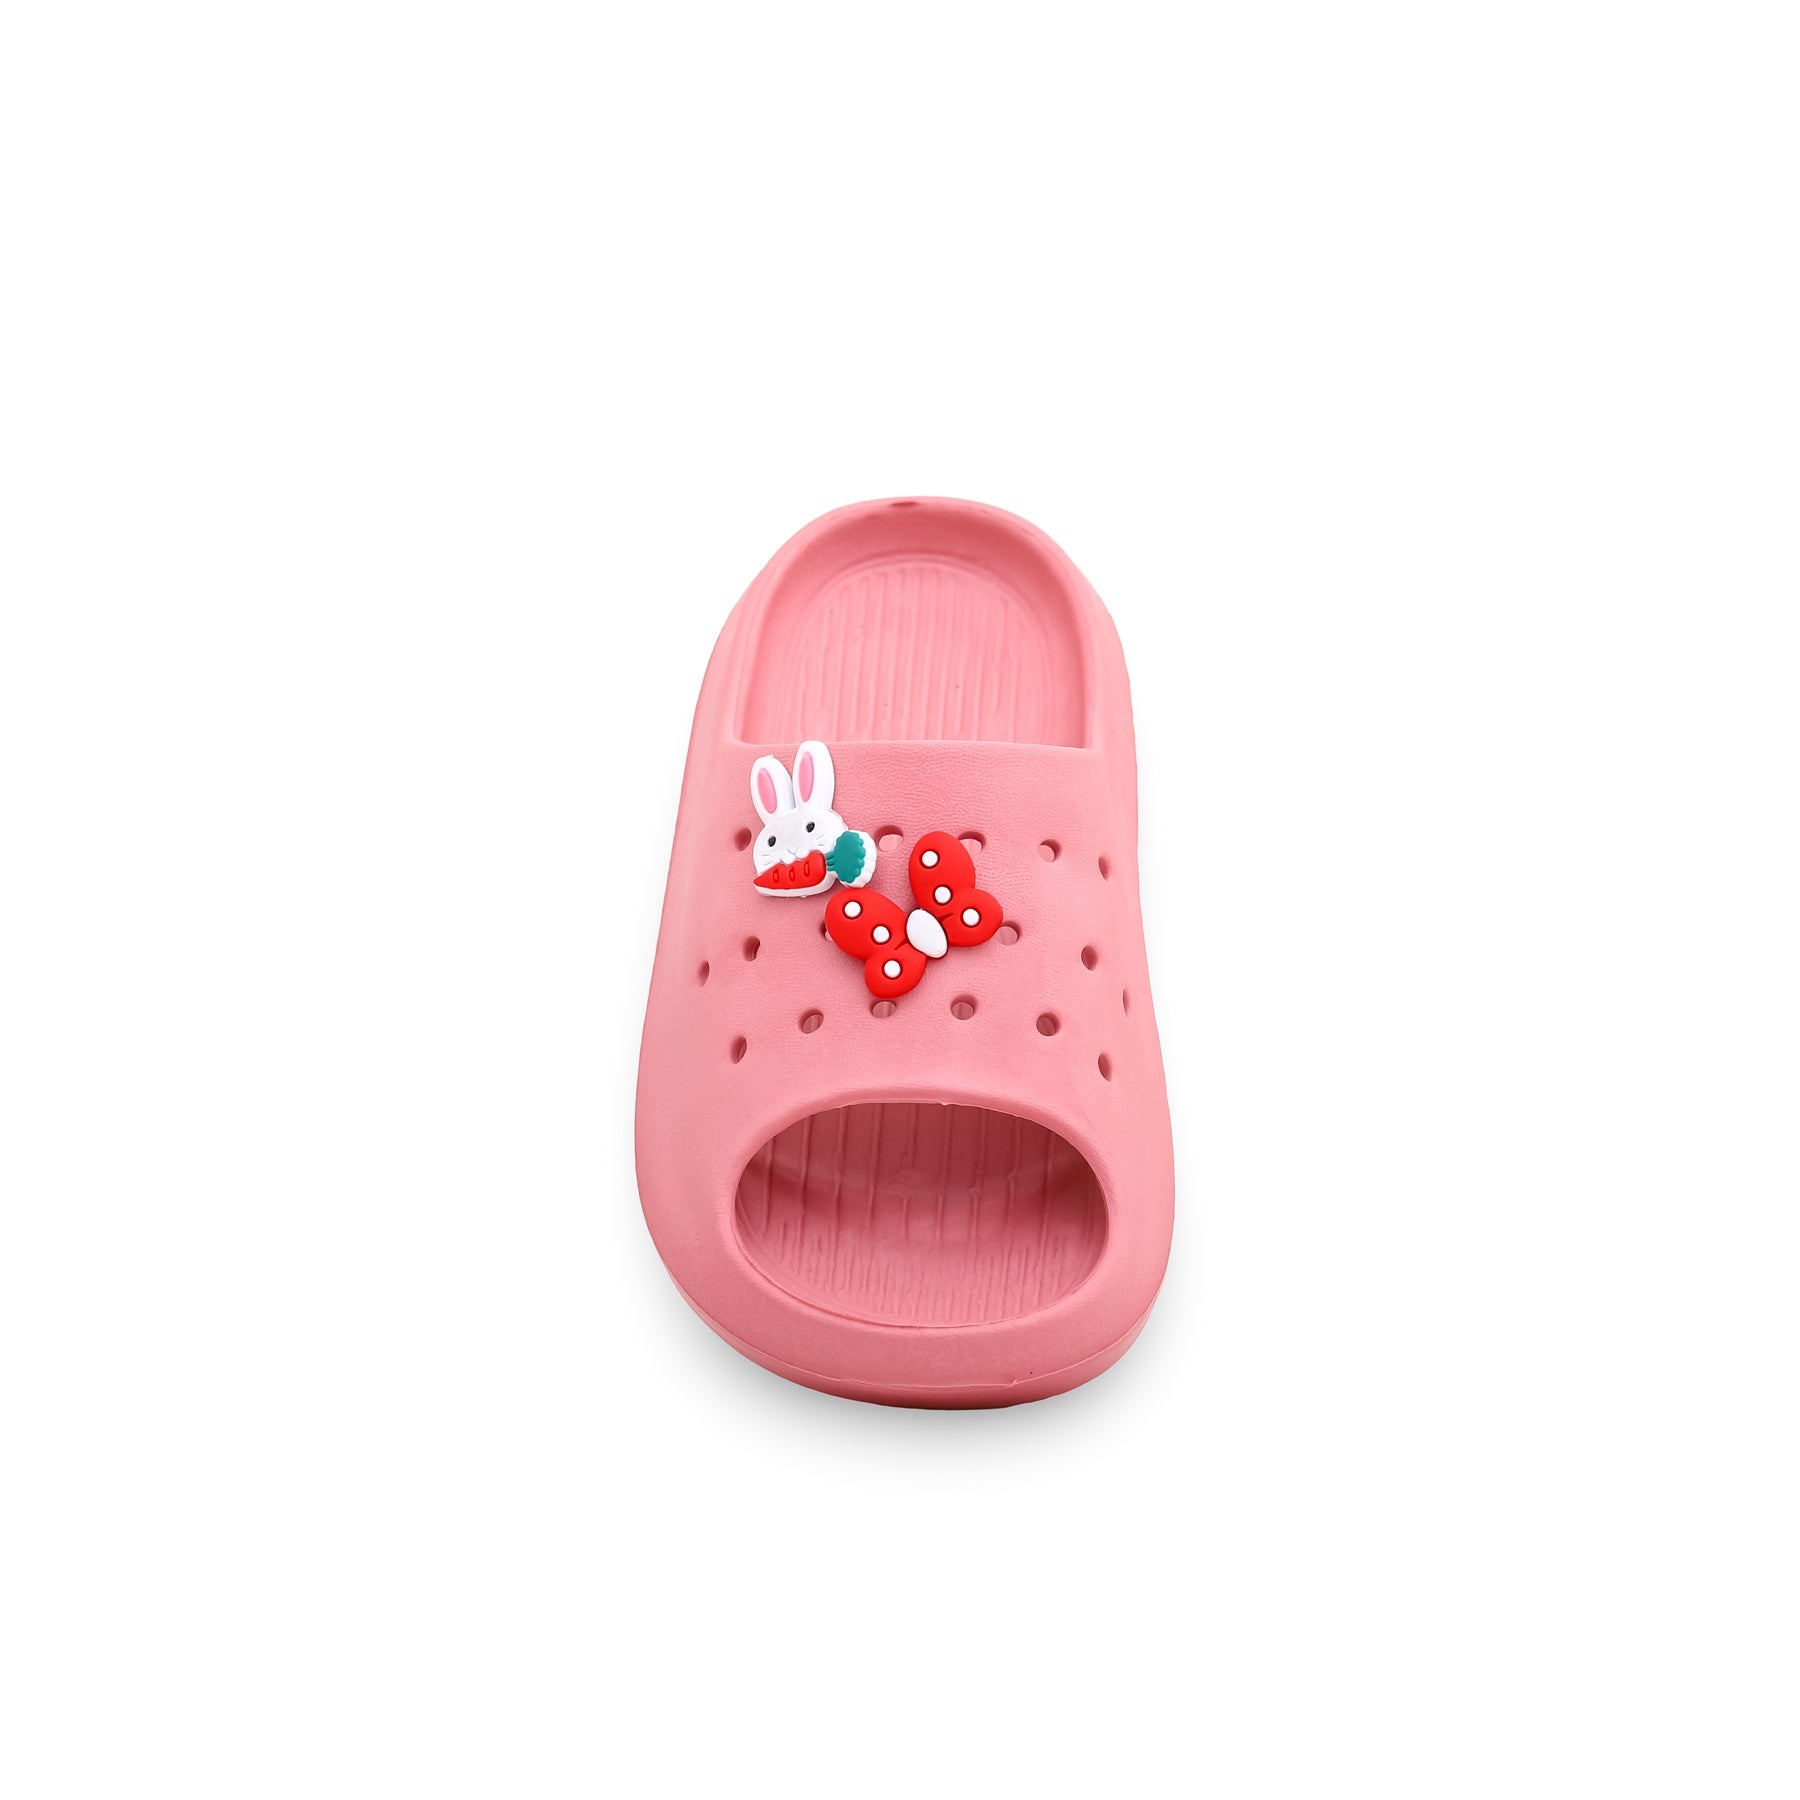 Girls Pink Casual Flip Flop KD5498